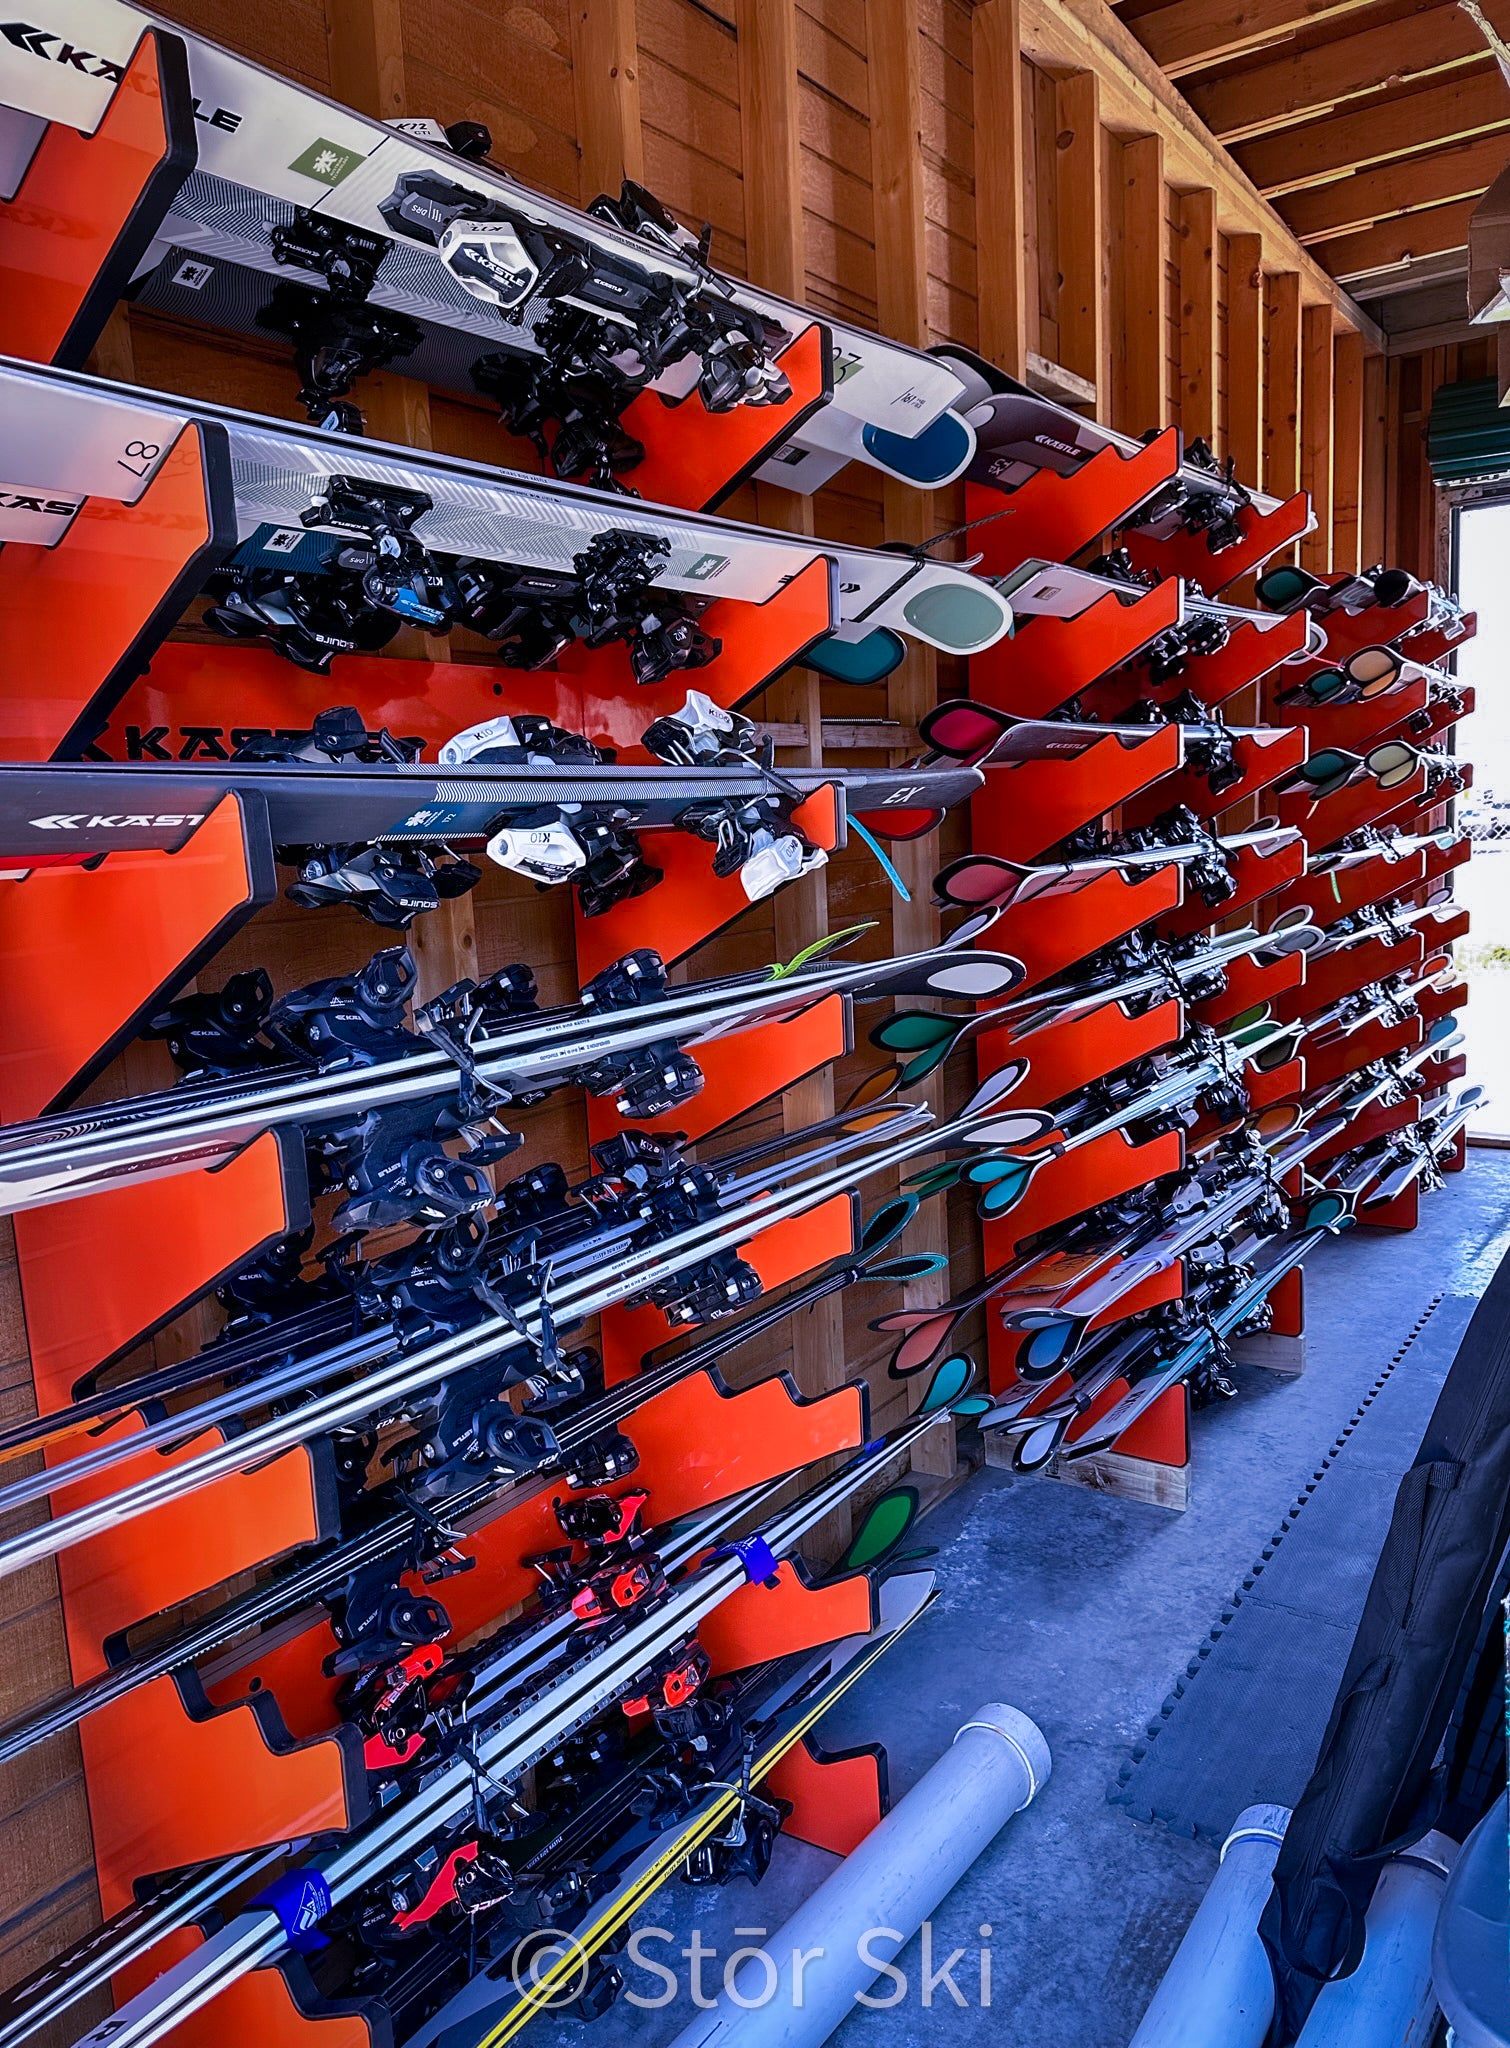 Kaestle ski rack installation for 72 pairs